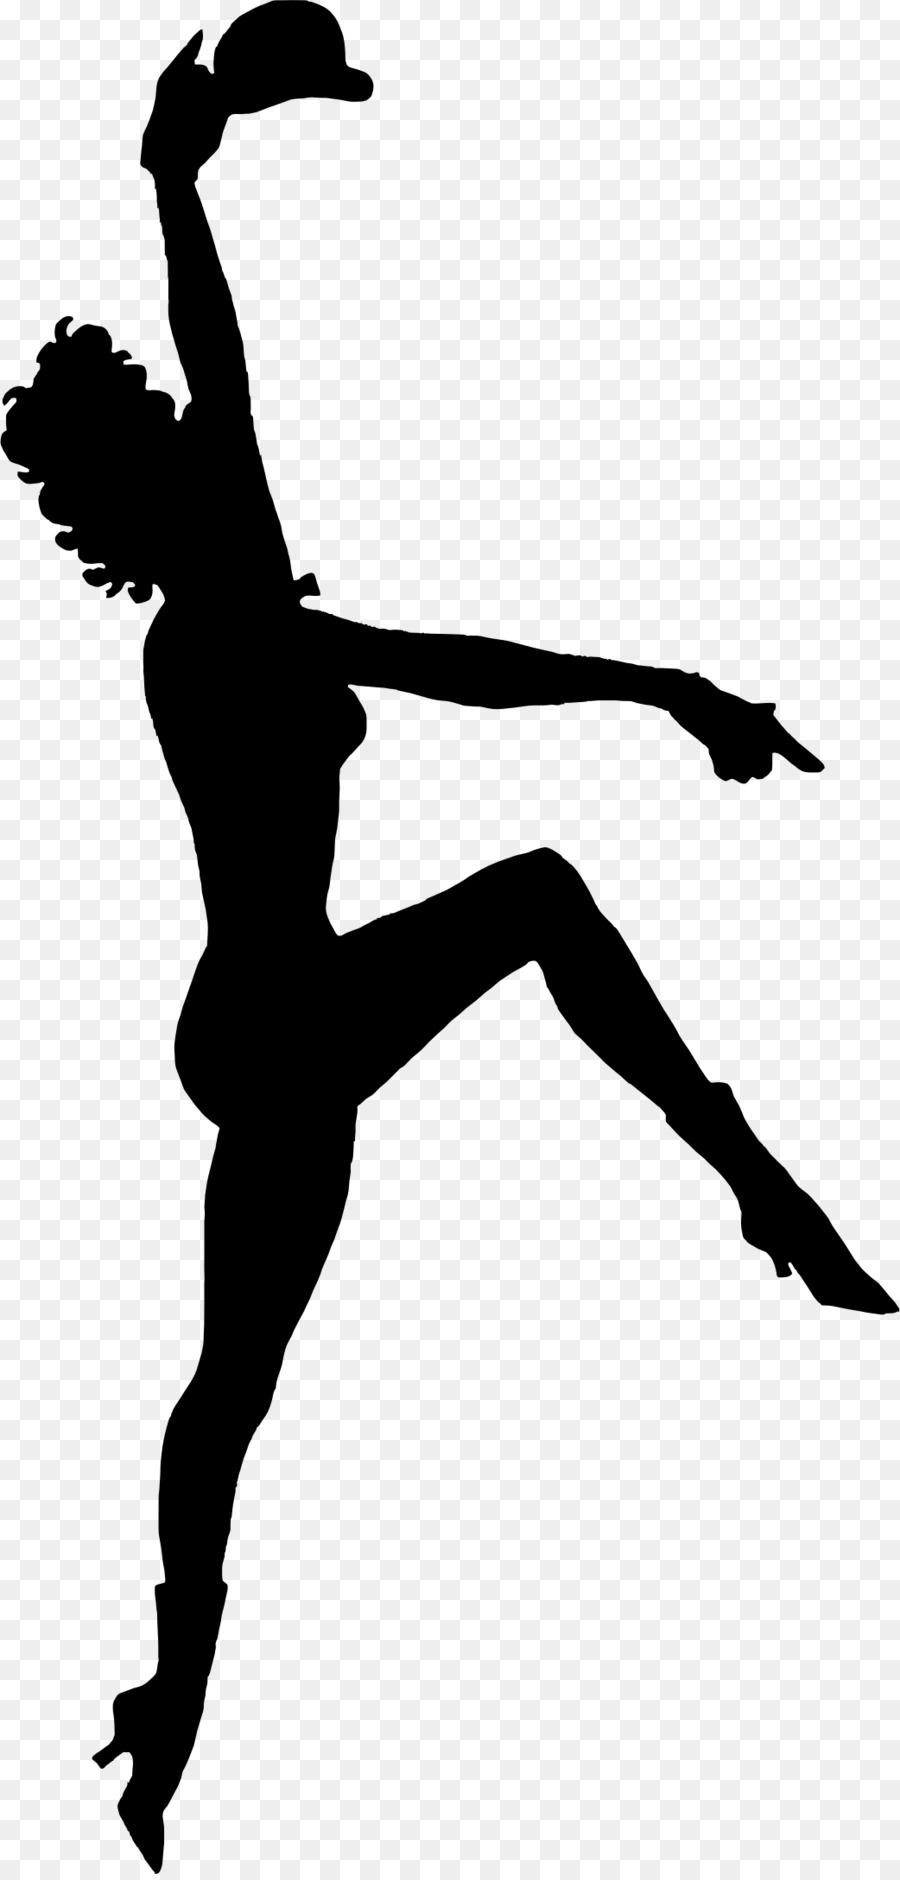 Ballet Dancer Broadway theatre Silhouette - dancing png download - 1042*2170 - Free Transparent Dance png Download.